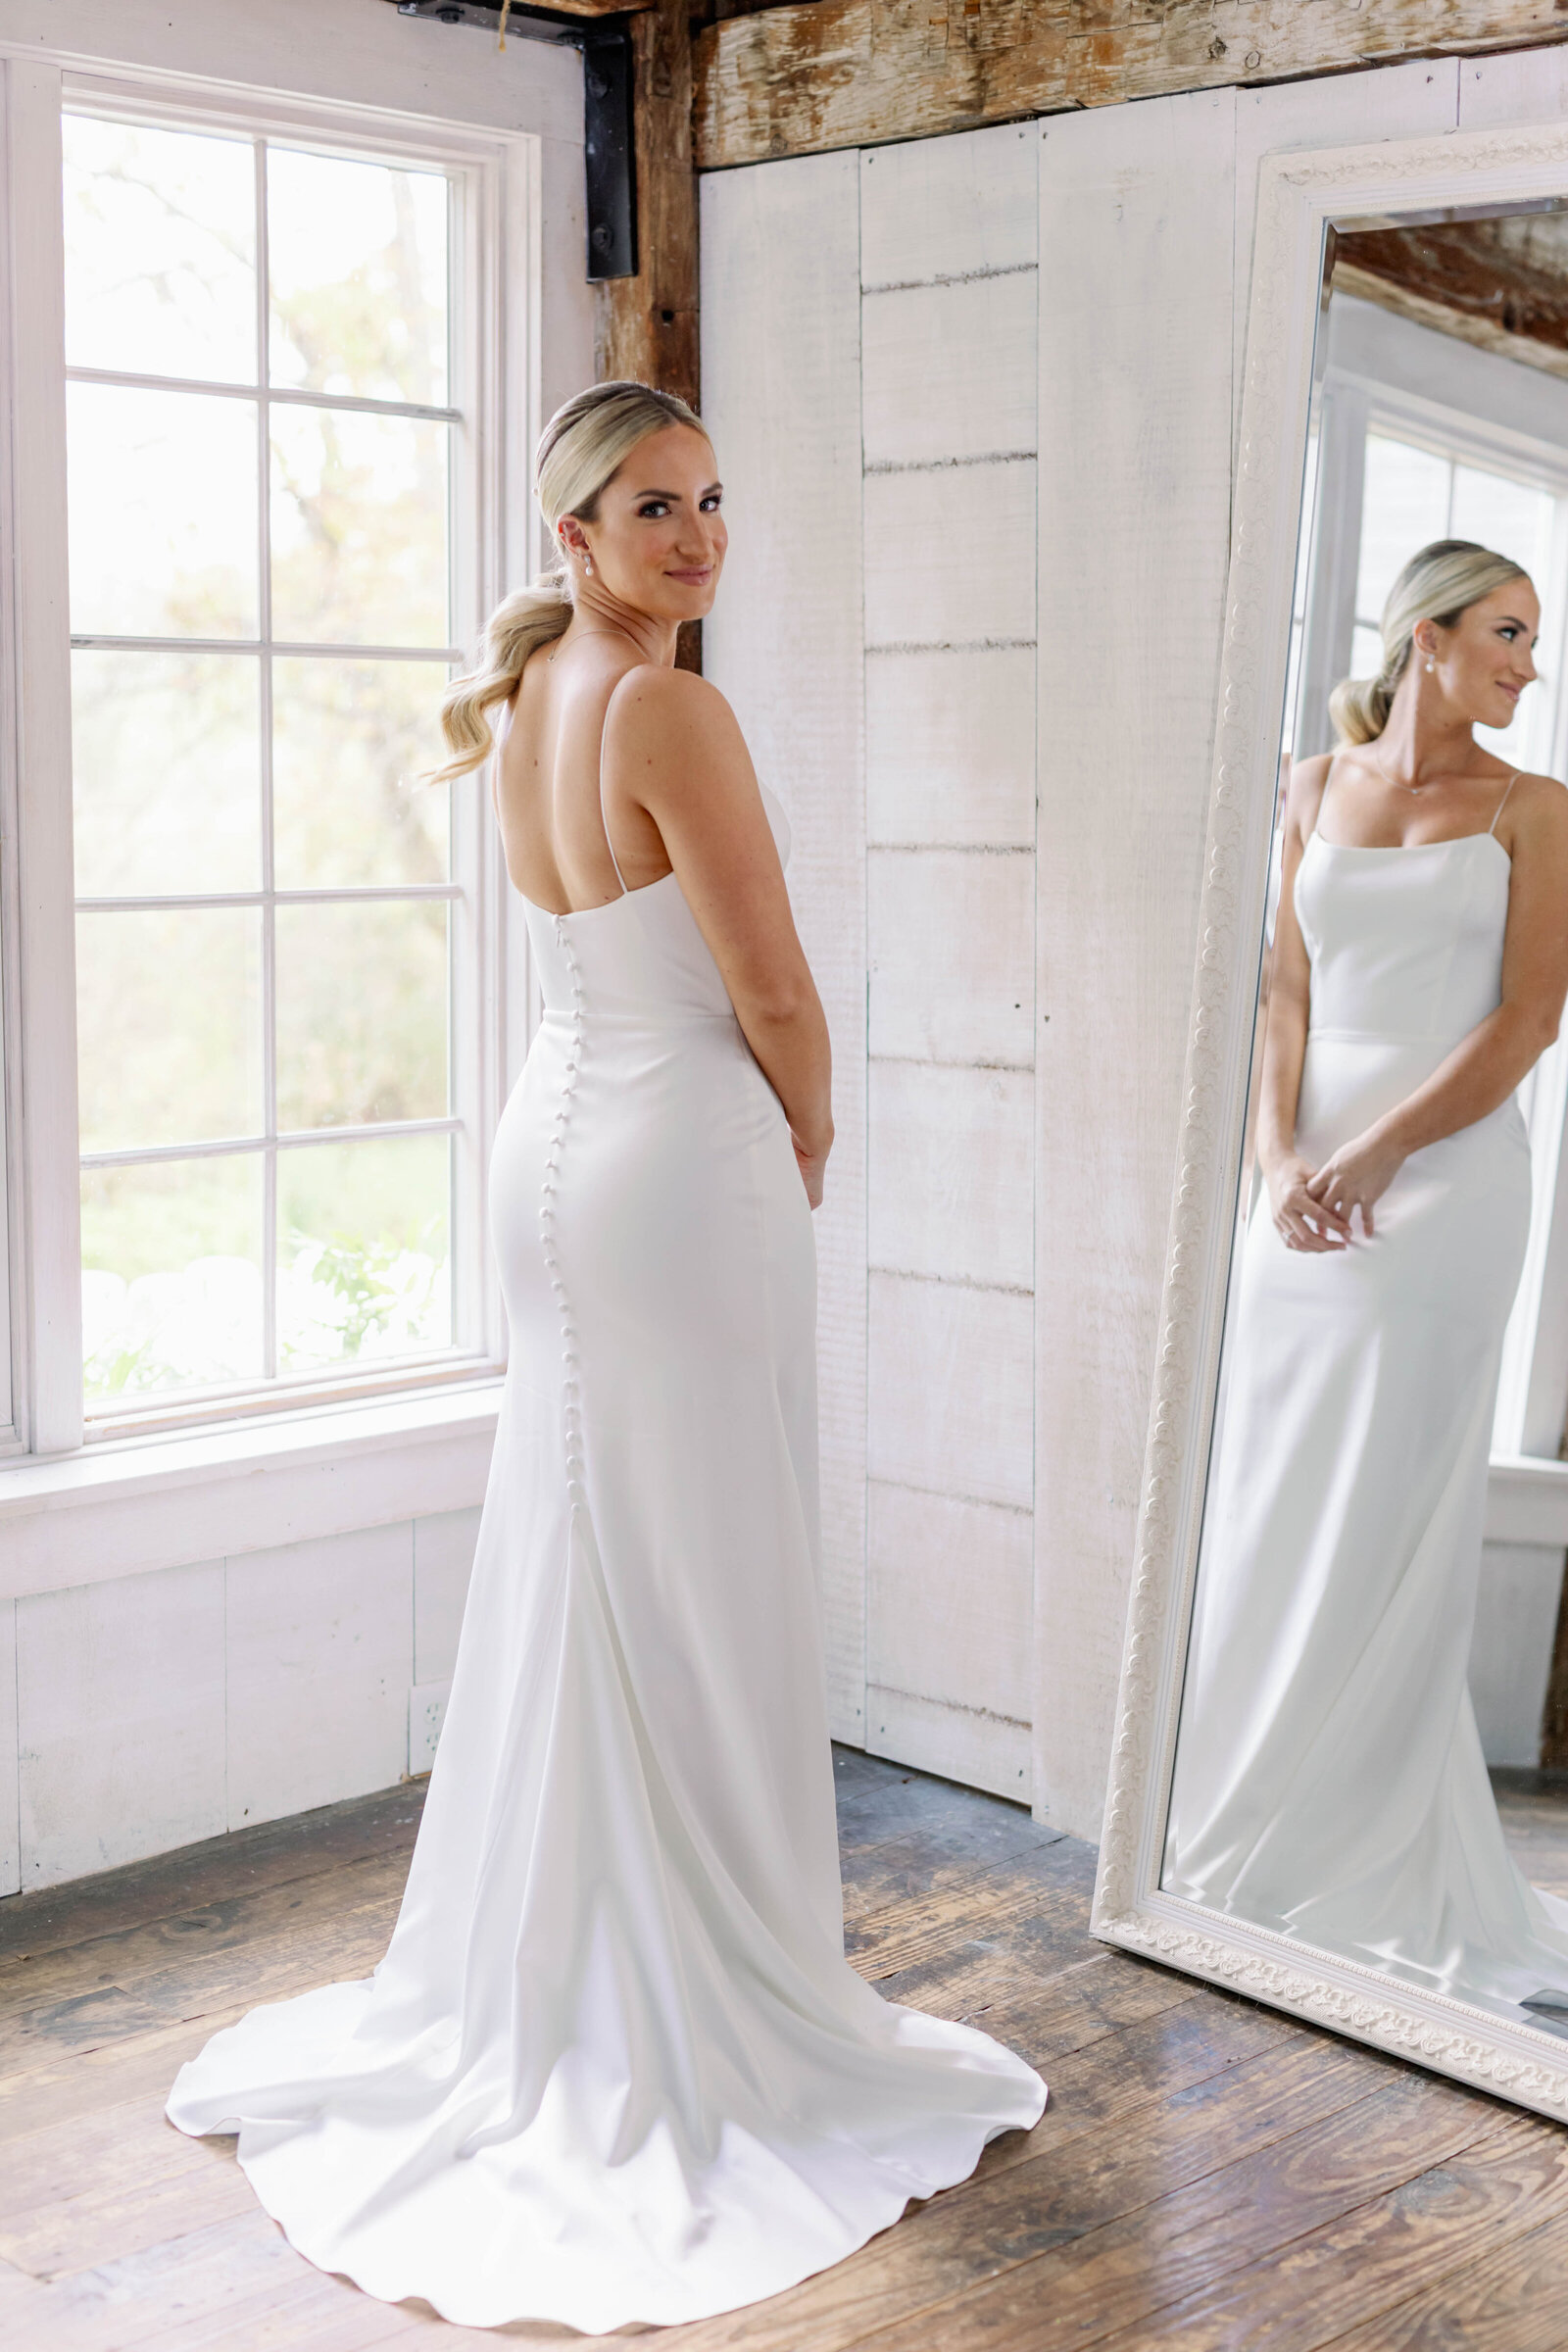 Bride admiring herself in wedding gown in mirror